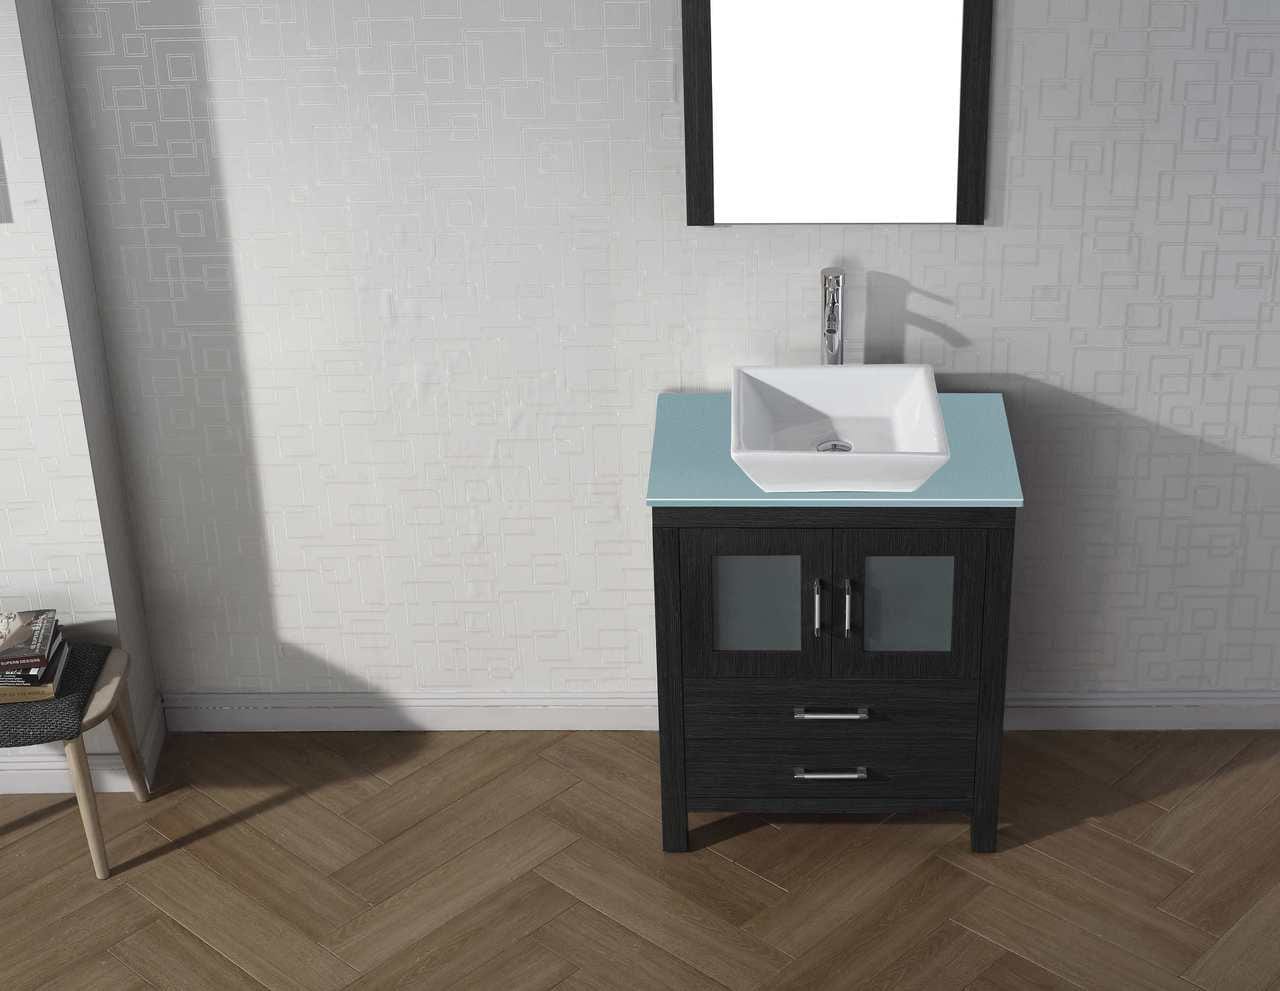 Virtu USA Dior 28 Single Bathroom Vanity in Zebra Grey w/ Aqua Tempered Glass Top & Square Sink w/ Polished Chrome Faucet & Mirror